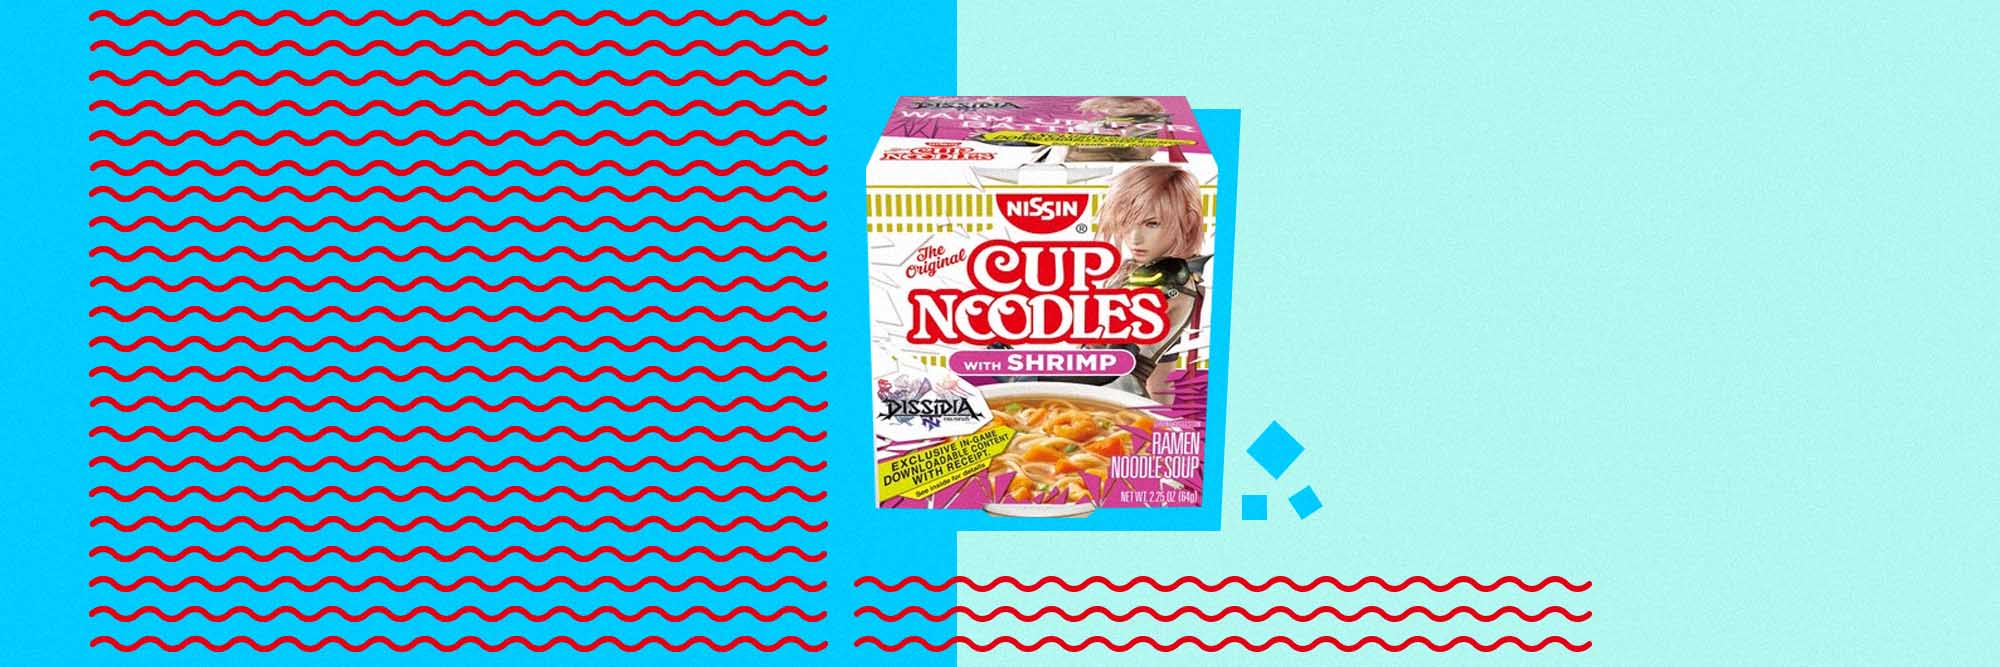 Nissin Unveils Limited Edition Set of 'Final Fantasy' Cup Noodles